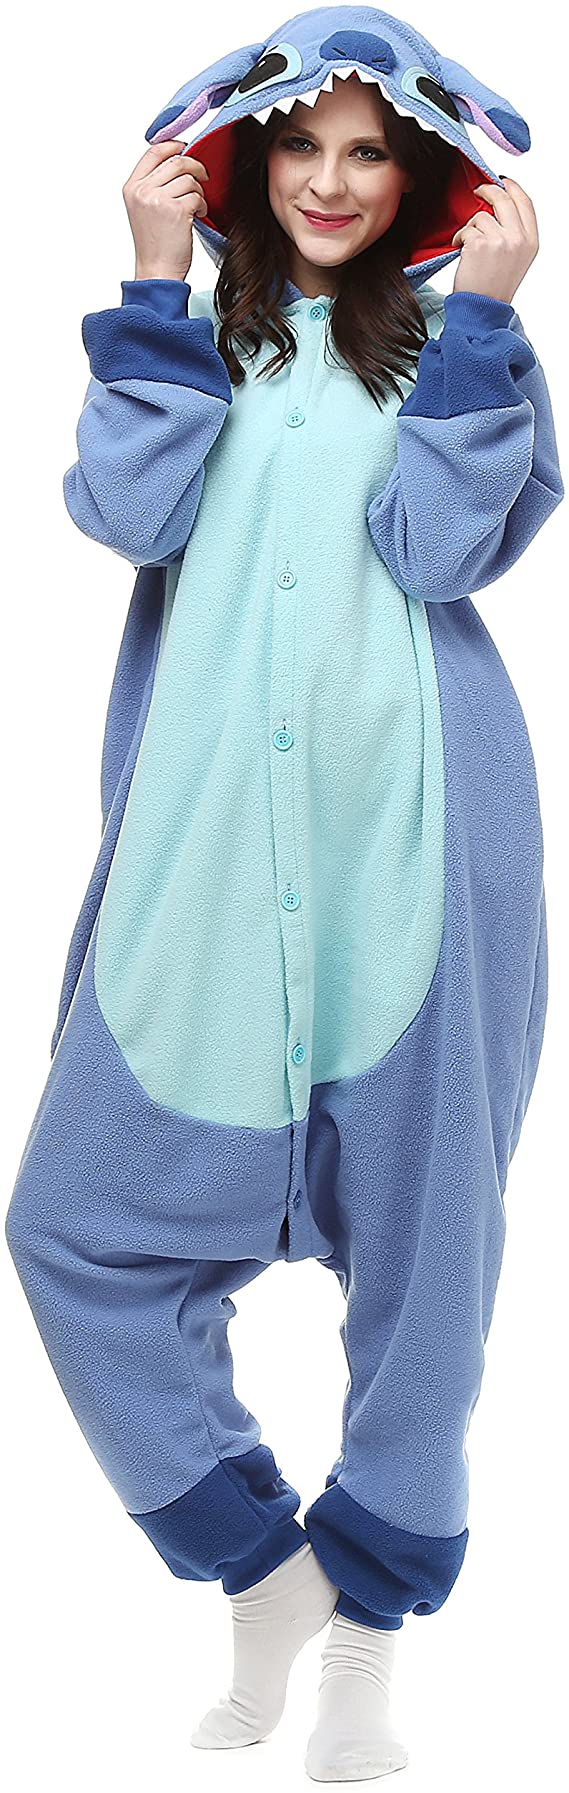 VU ROUL Unisex Adult Costumes Kigurumi Stitch Onesie Pajamas Blue